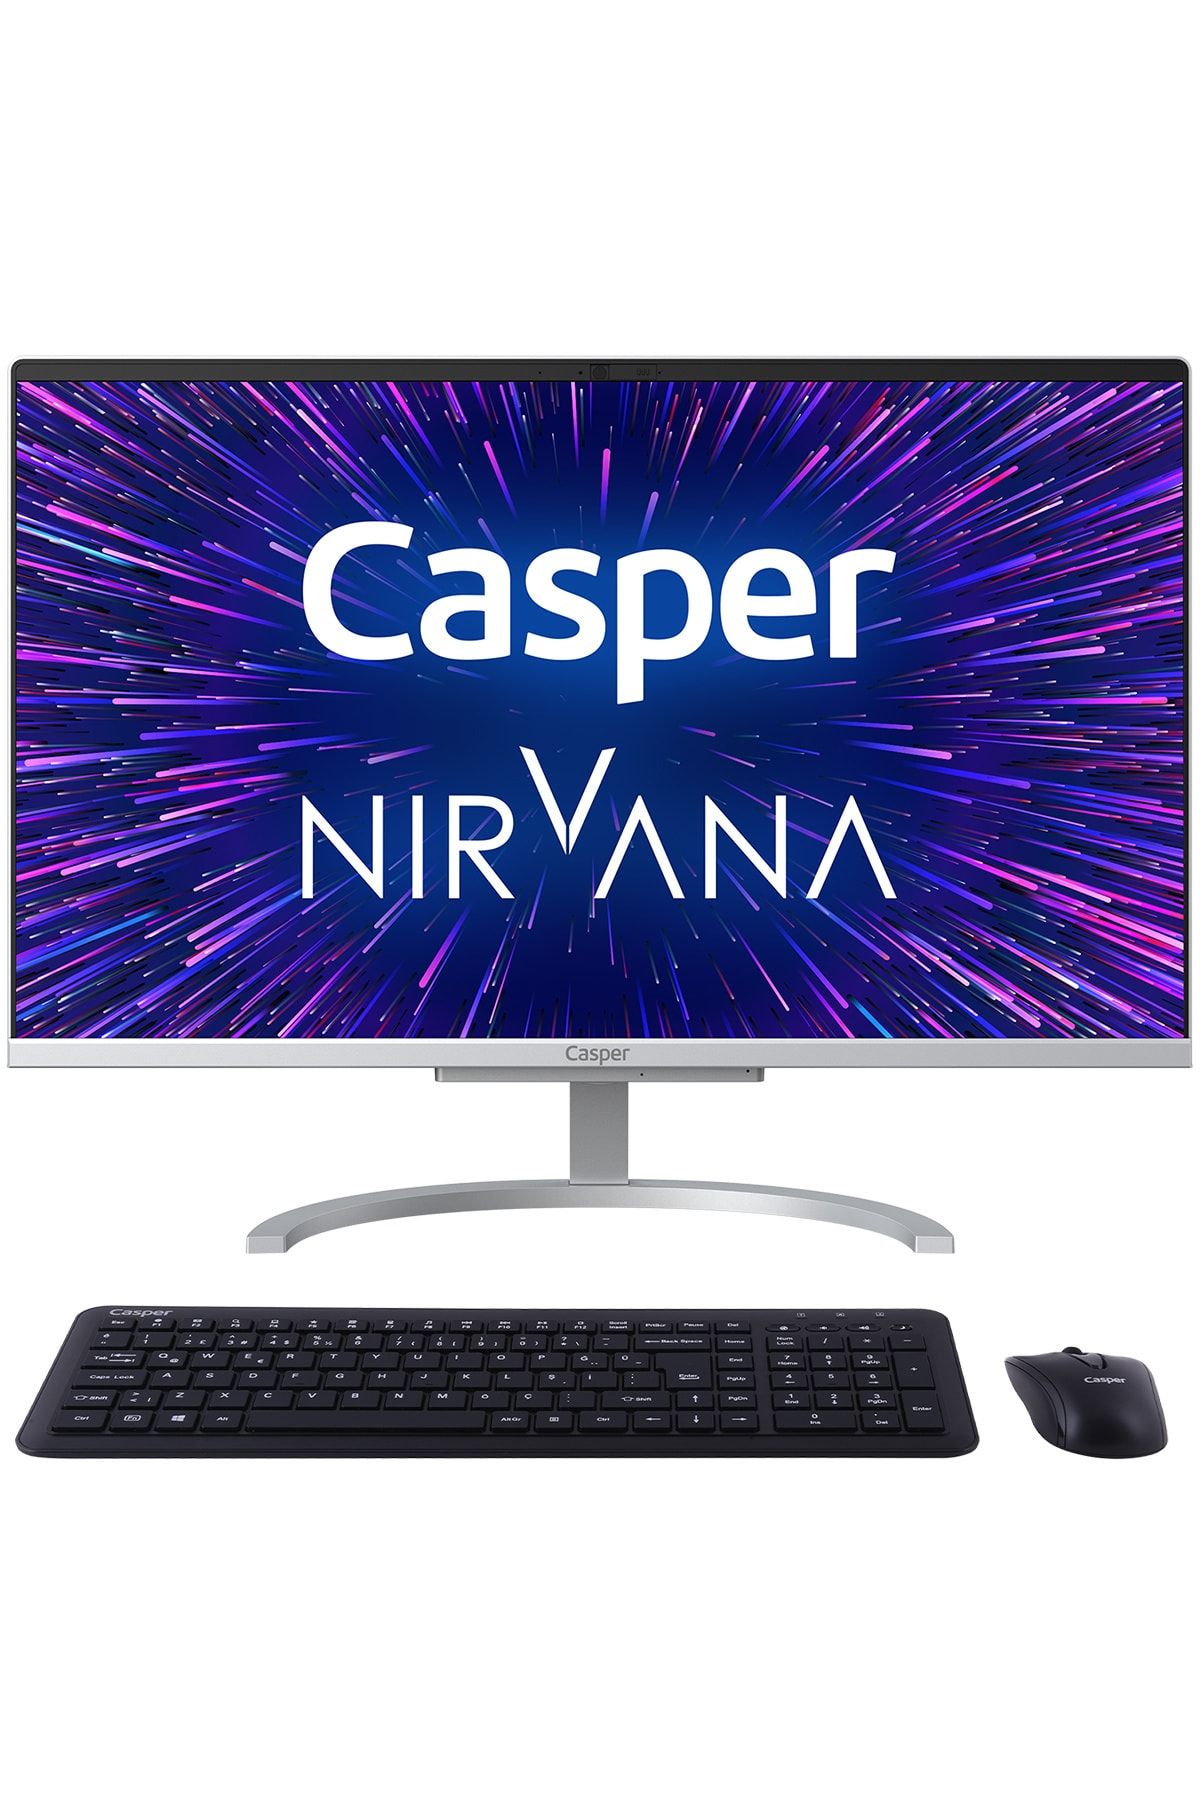 Casper Nirvana A46.1035-4c00x-v Intel Core I5-1035g1 4gb 120gb Ssd Freedos 21.5" Fhd